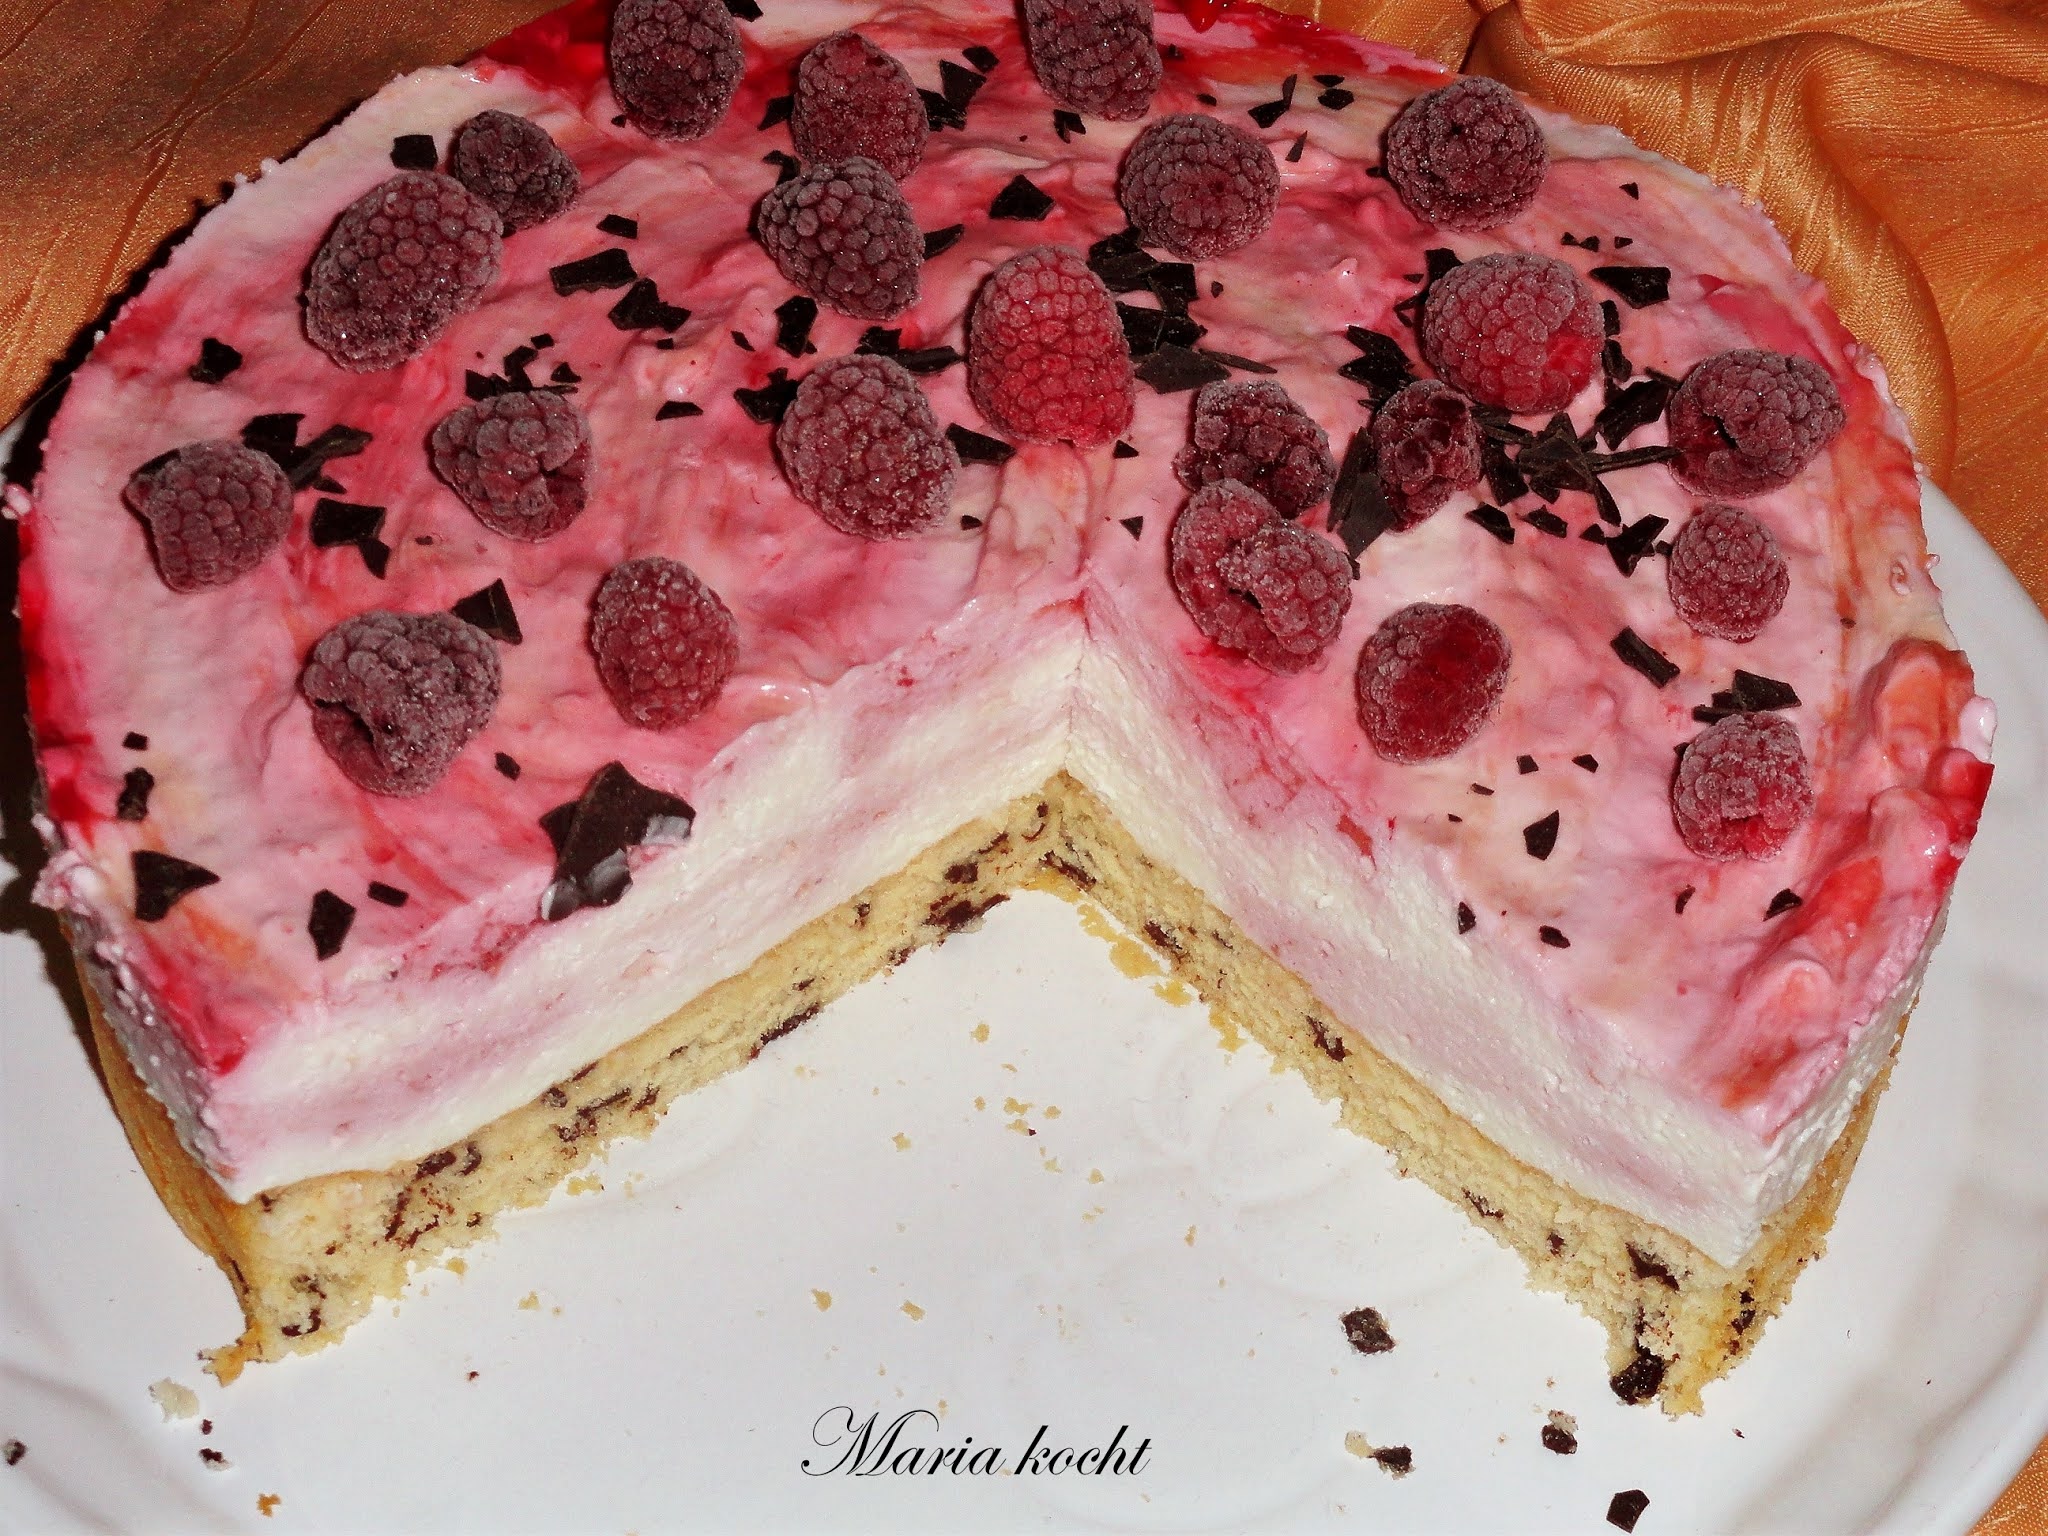 Maria kocht: Himbeer-Mascarpone-Torte / Málnás mascarpone torta